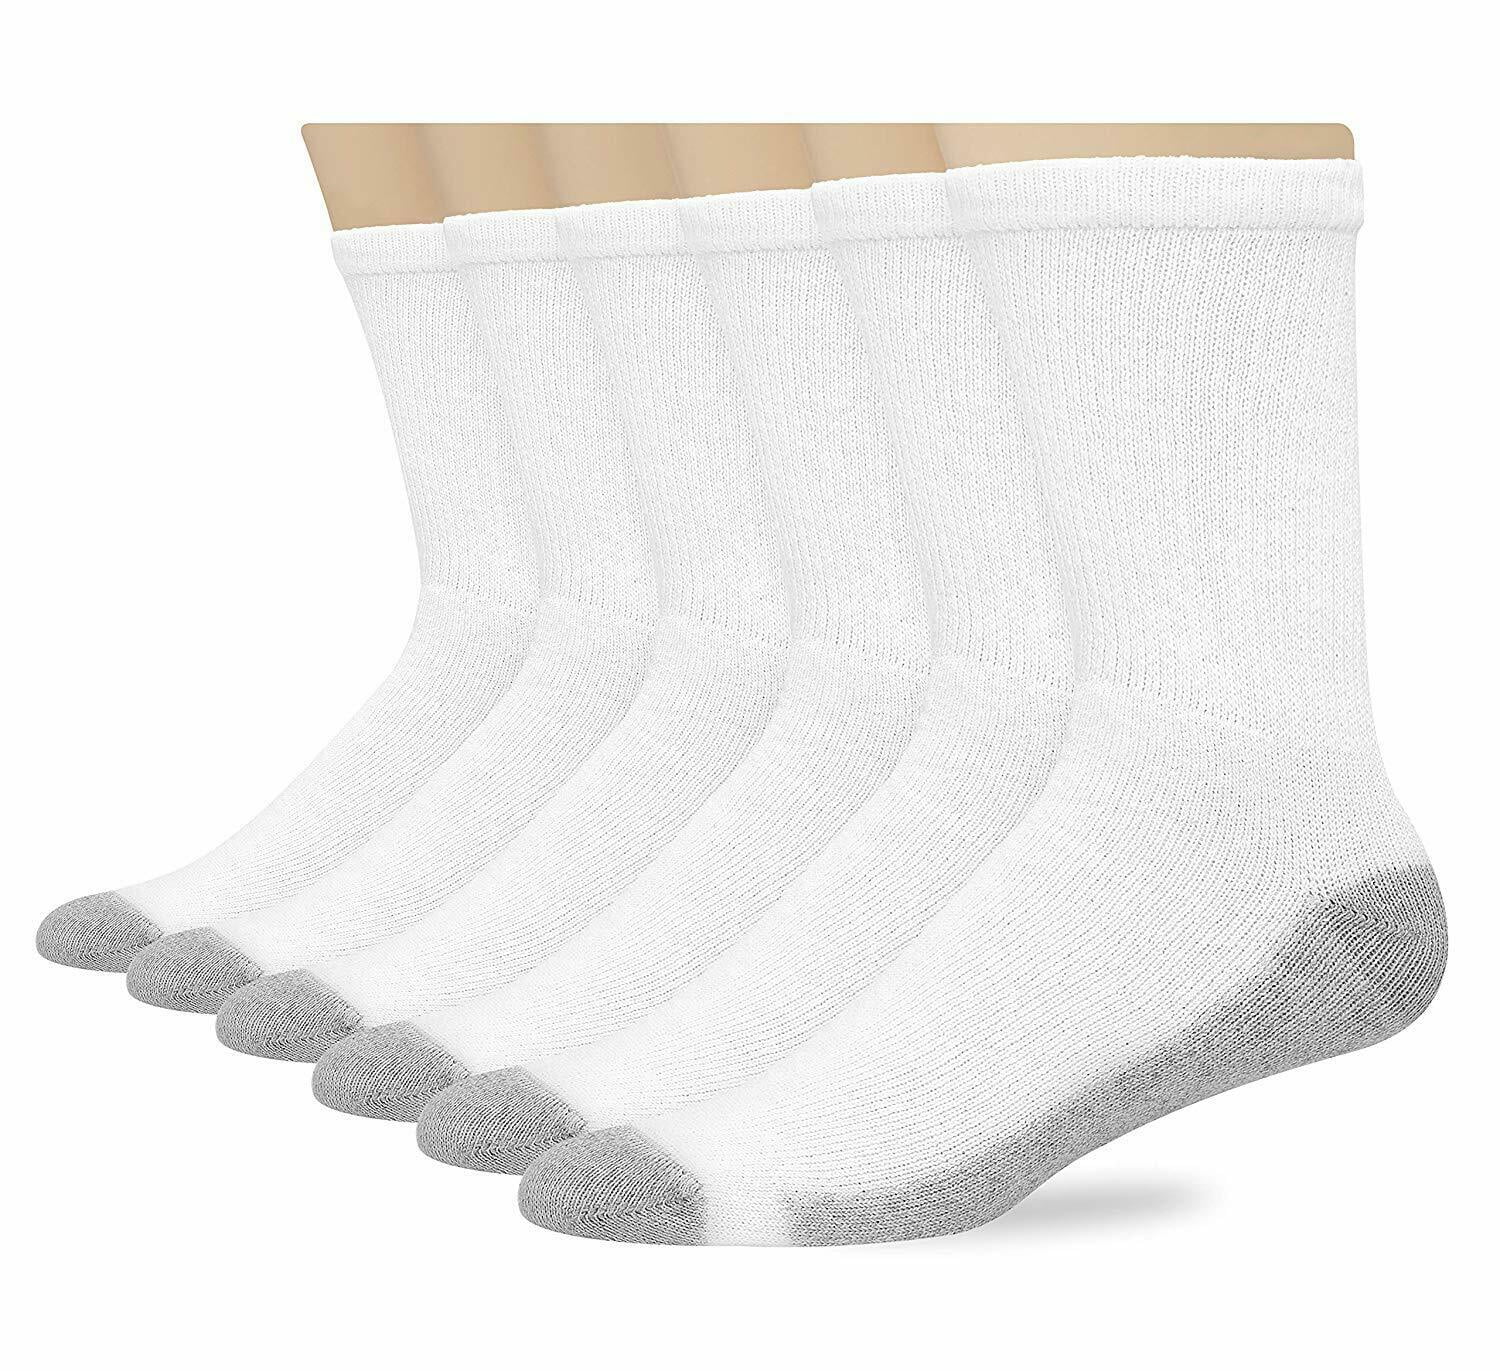 Hanes New Mutli Pairs Mens White Sports Athletic Crew Socks Cotton Size 6-12 